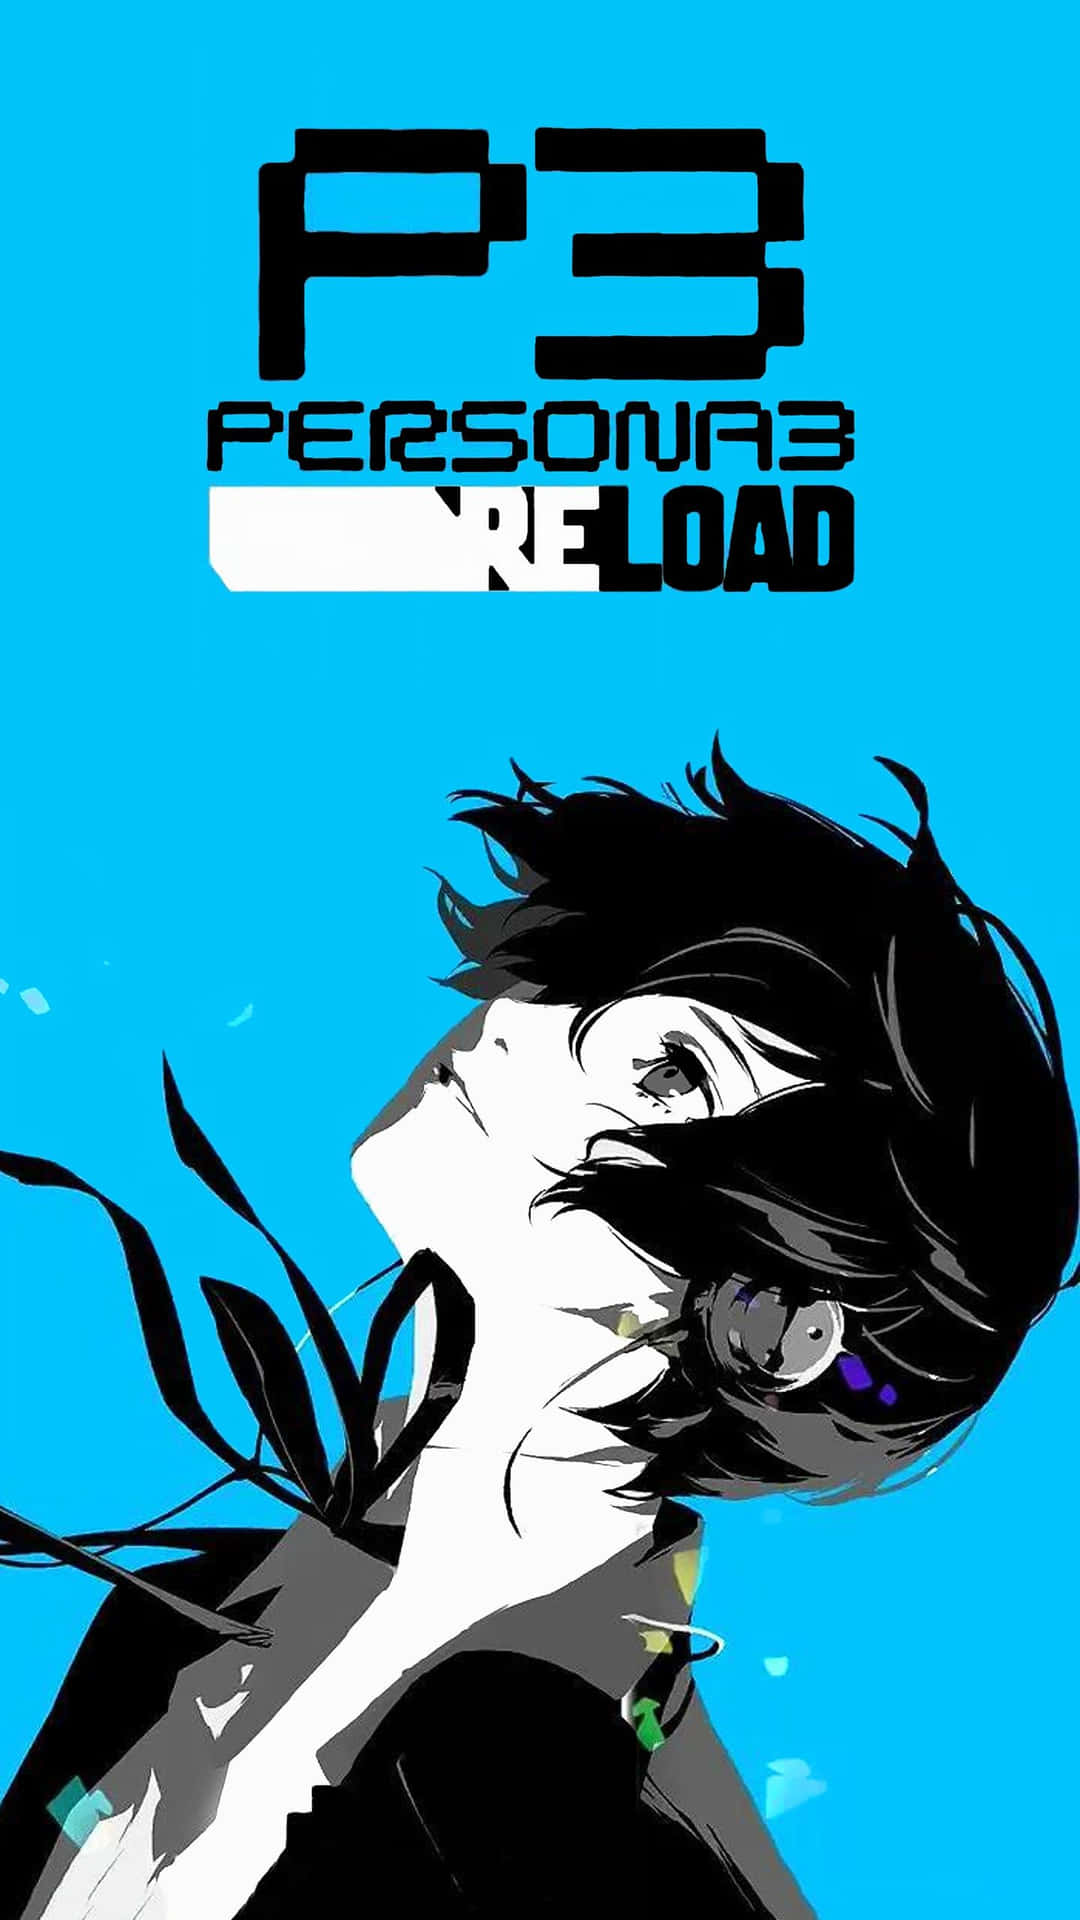 Persona3 Reload Anime Style Artwork Wallpaper